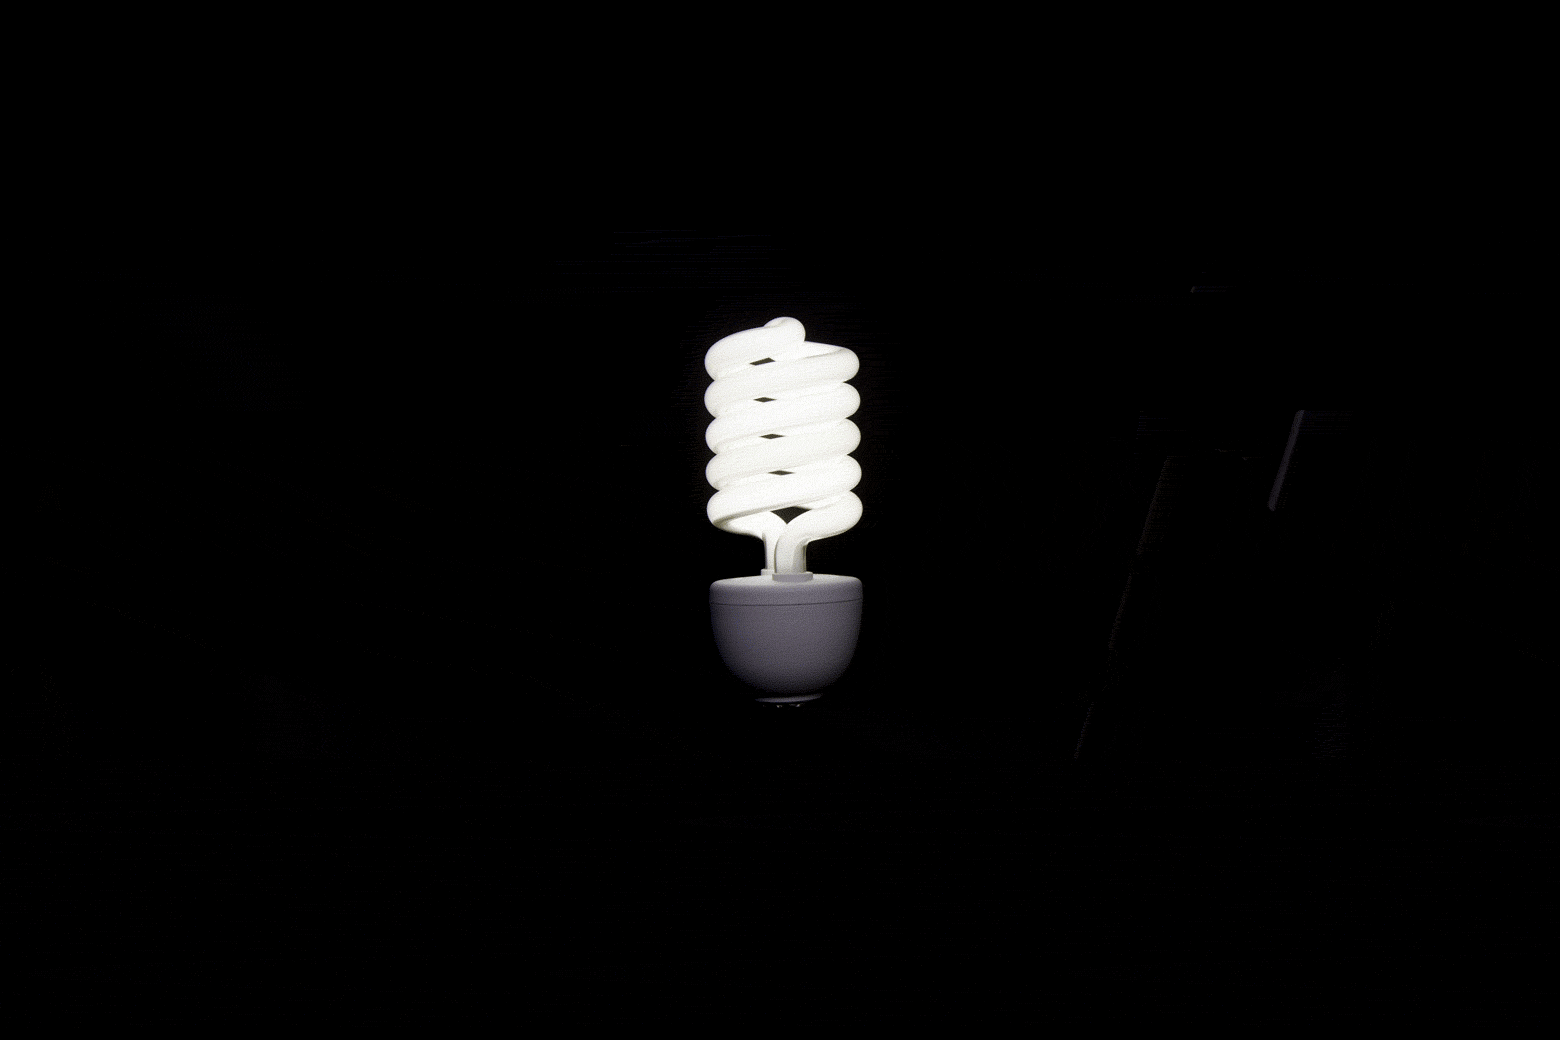 A gradually dying lightbulb